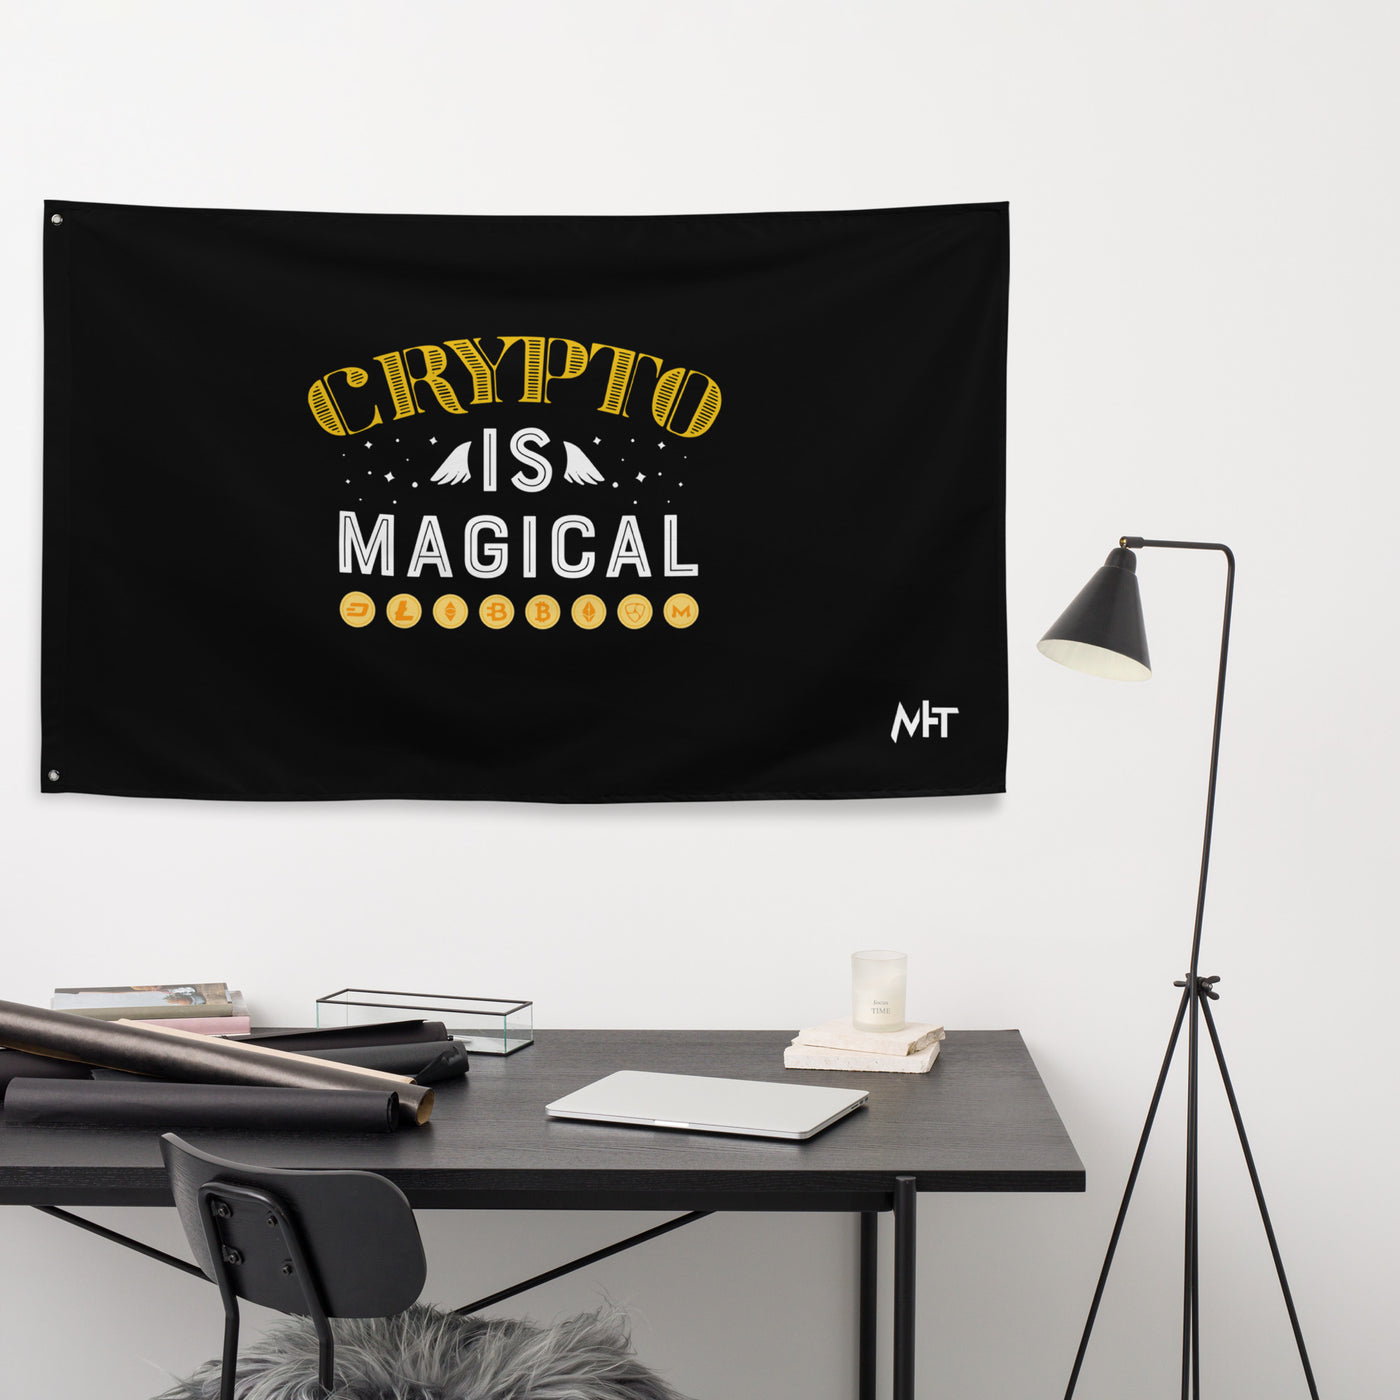 Crypto is Magical Flag